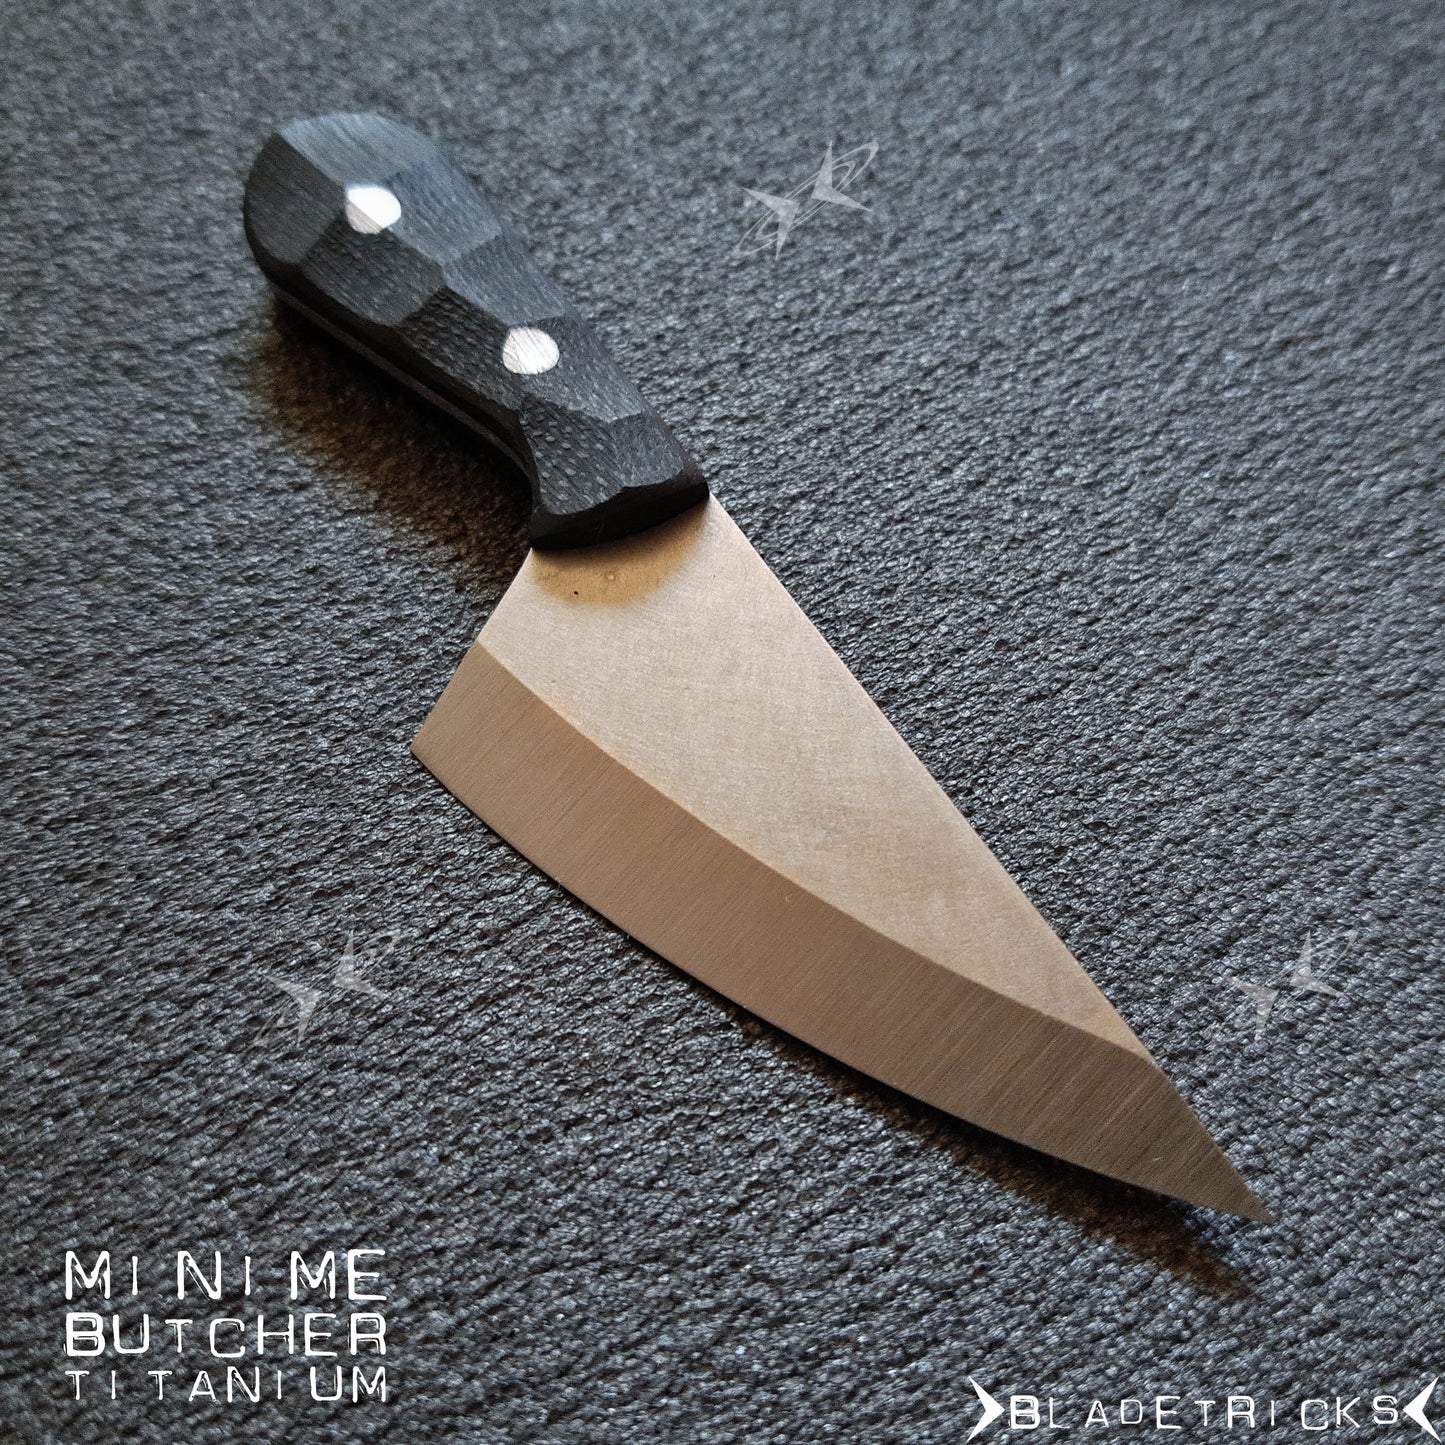 BLADETRICKS CUSTOM MINIME BUTCHER KNIFE, TITANIUM & BLACK G10